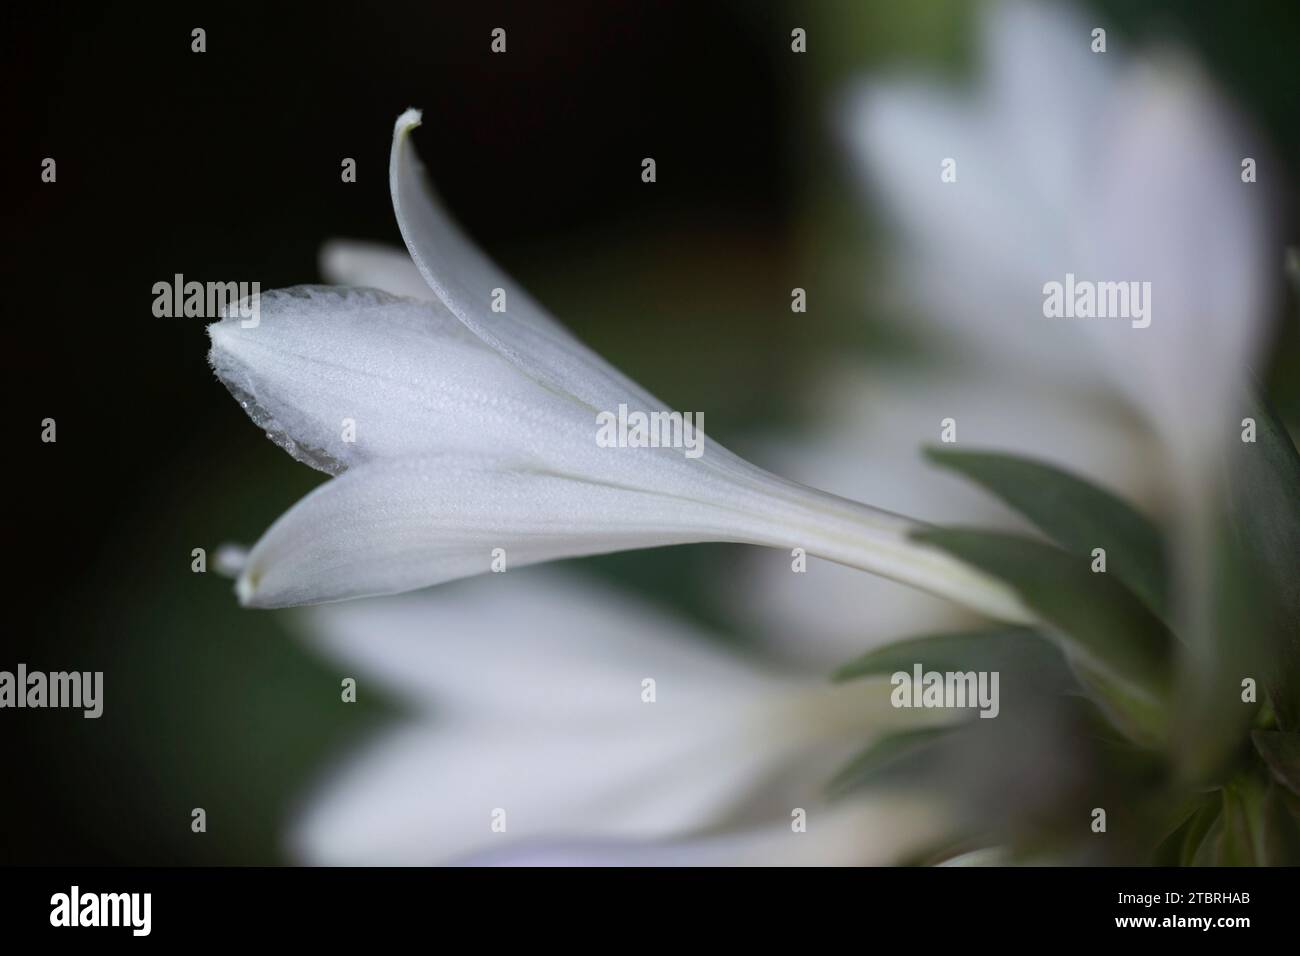 Hosta, close-up, white blossom, garden, summer Stock Photo